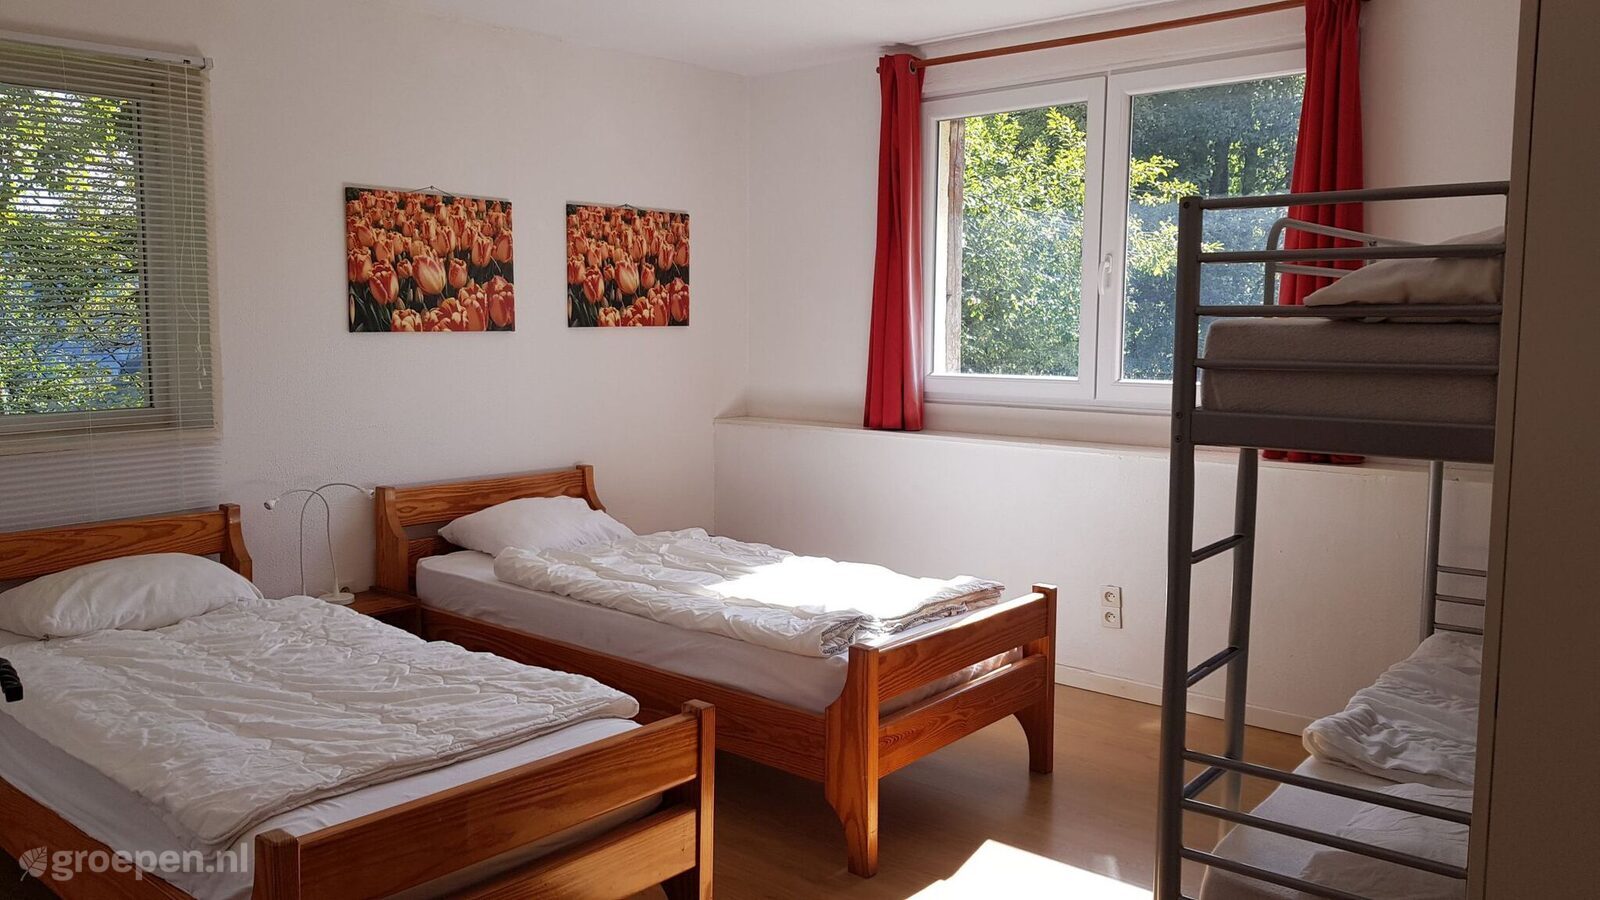 Group accommodation Ban sur Meurthe